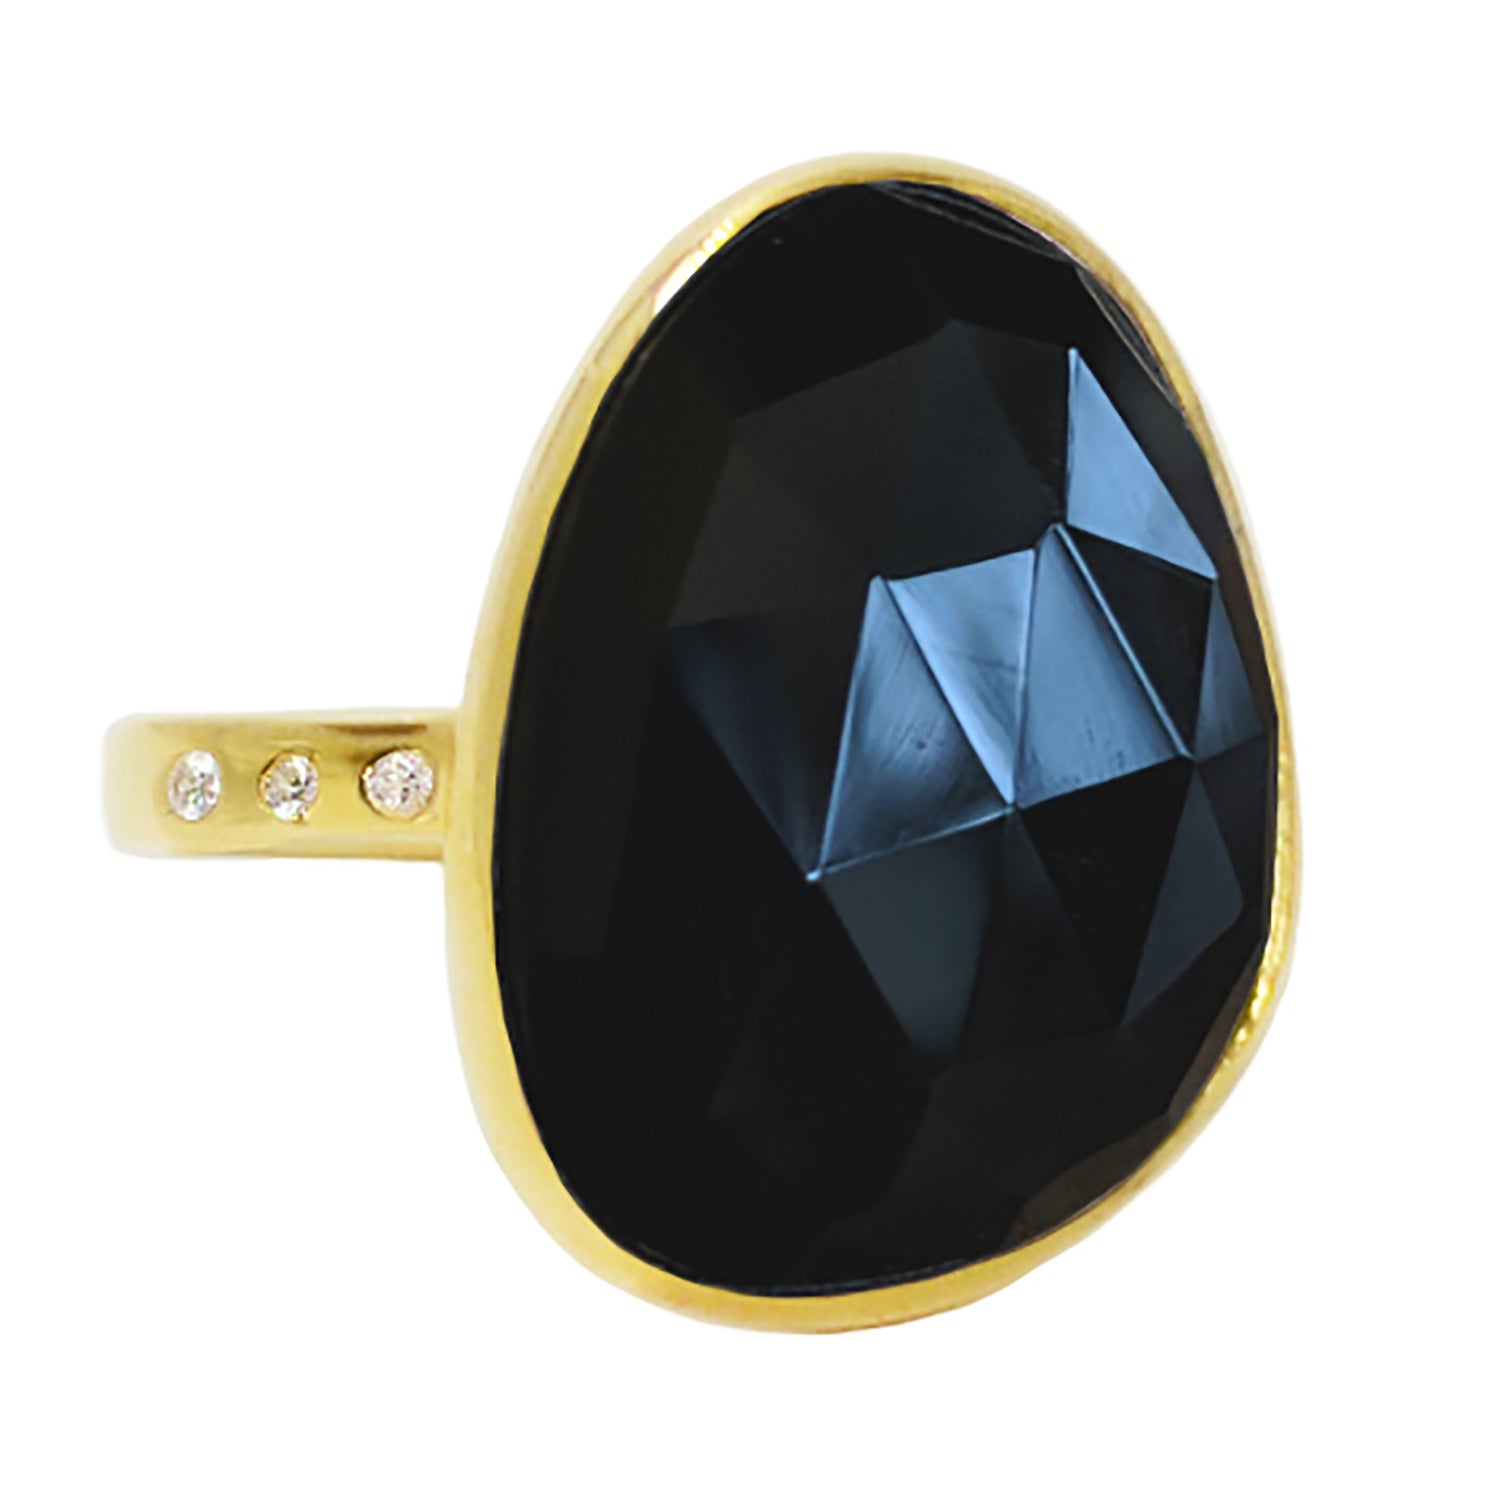 Black Spinel  Black Gems - Semi Precious Stones Supplier